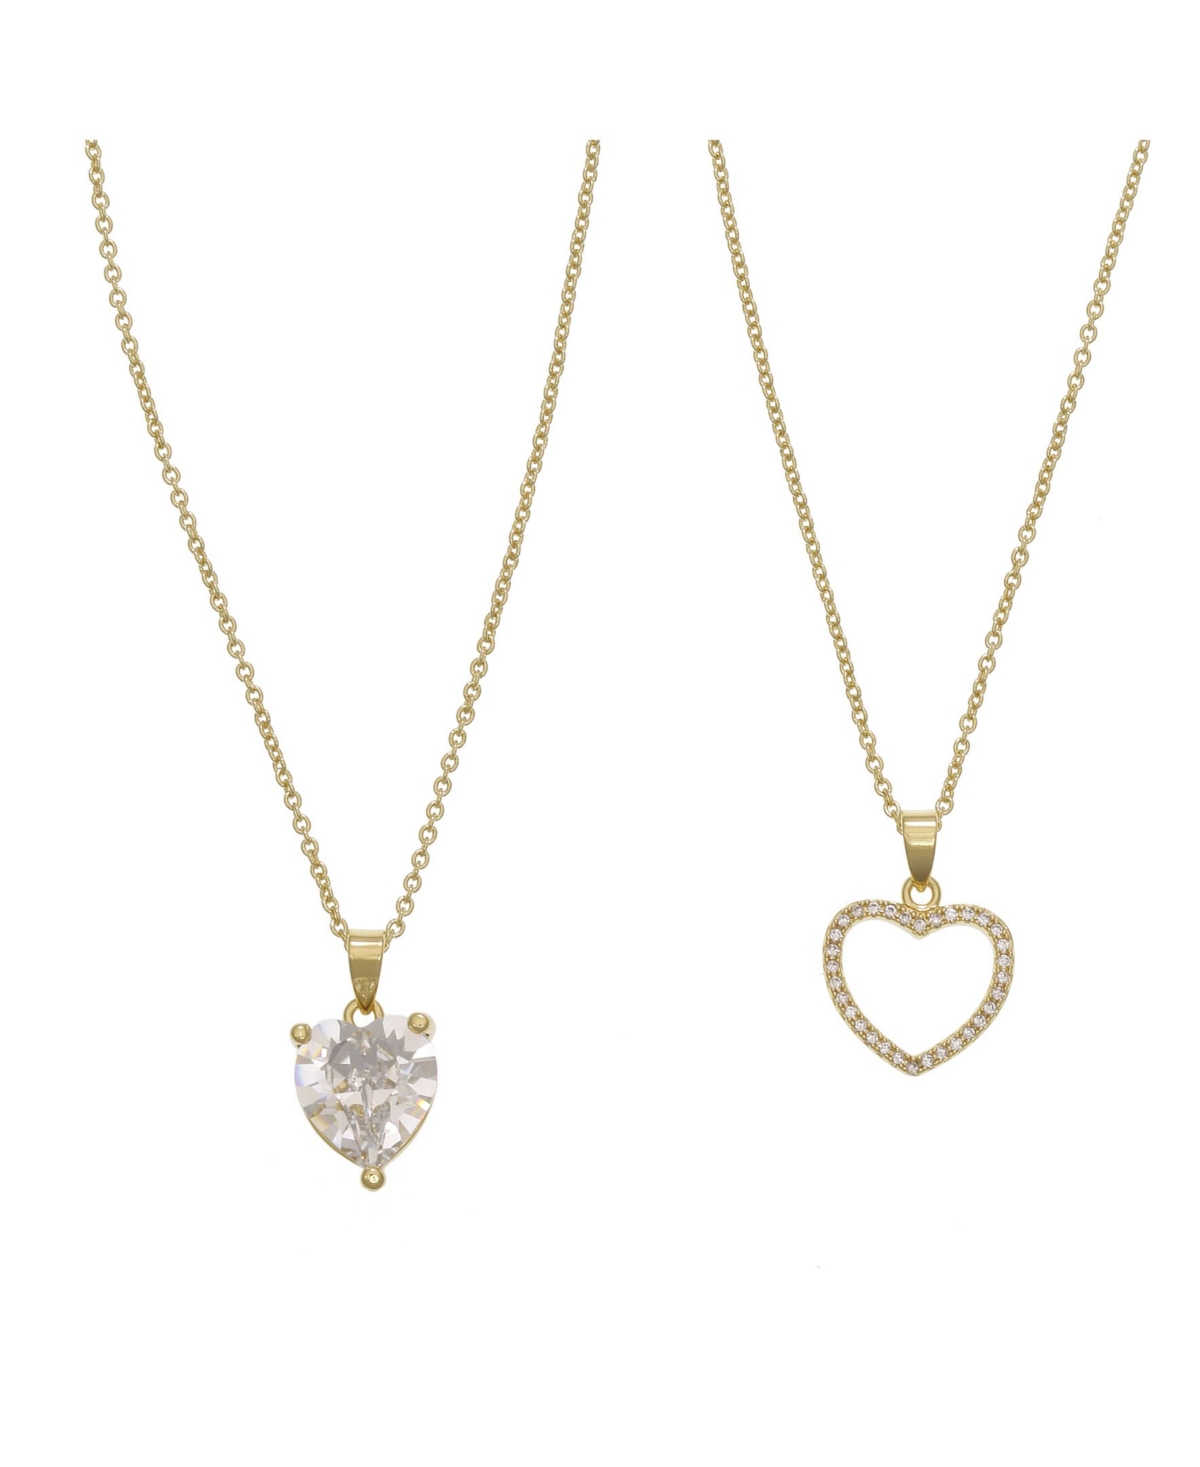 Fao Schwarz Women's Heart Pendant with Crystal Stones Necklace Set, 2 Piece